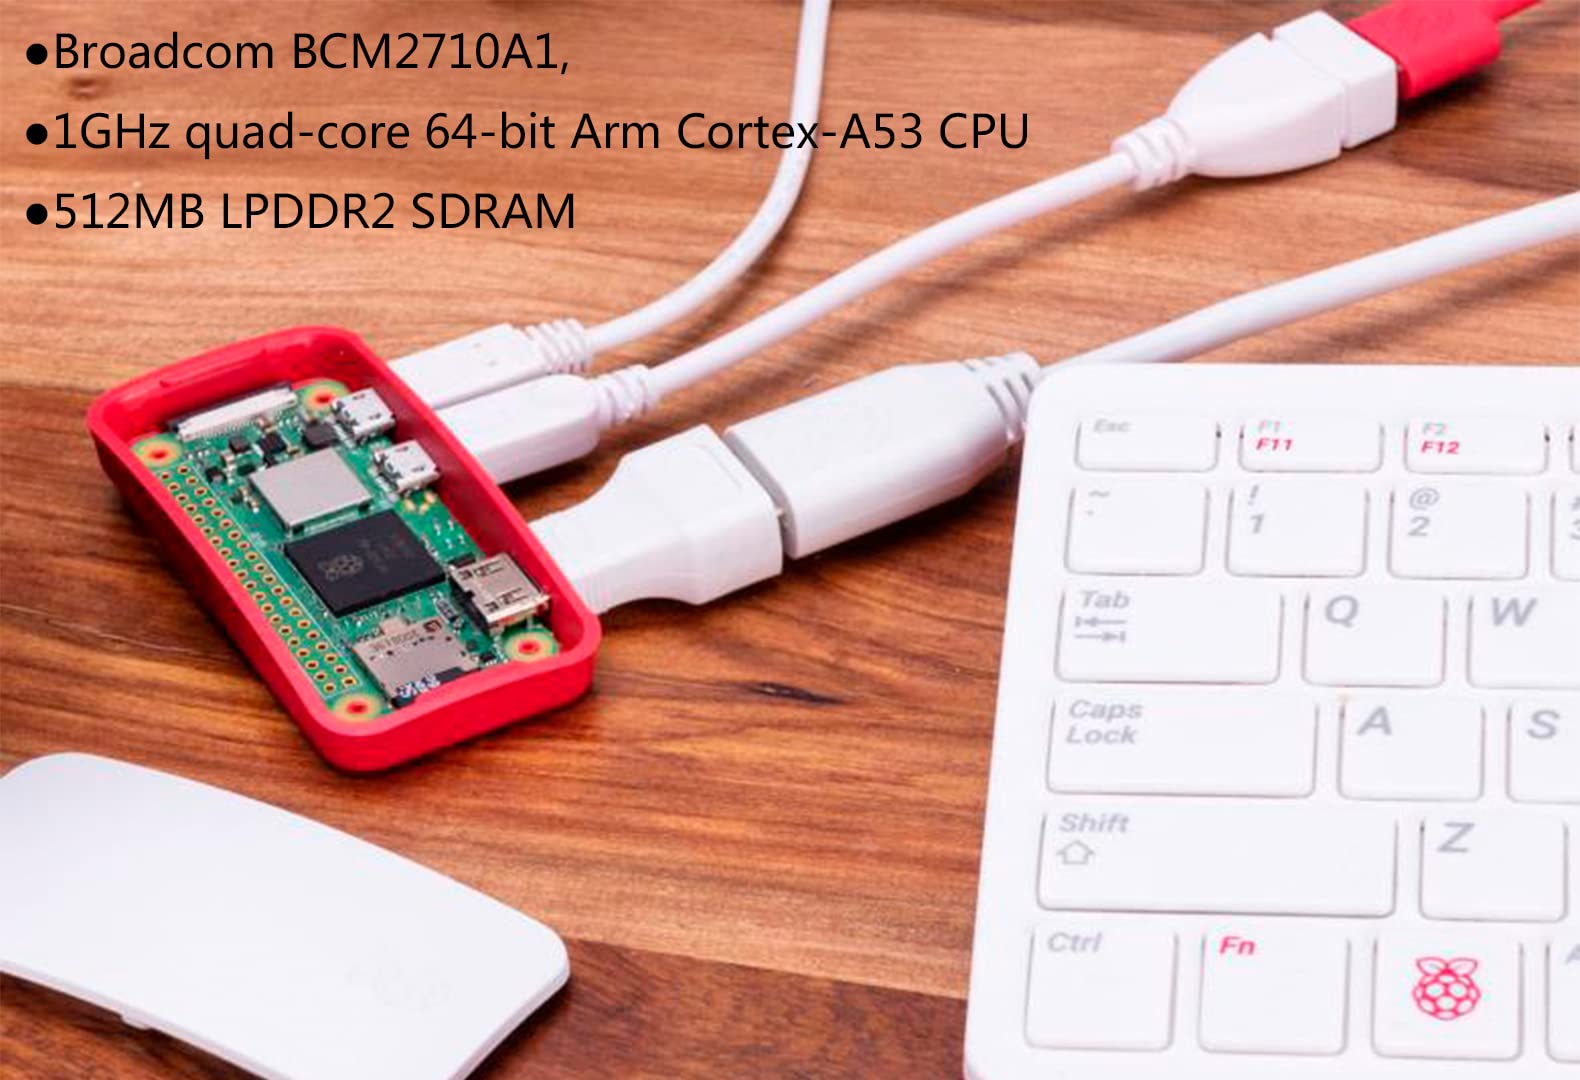 Raspberry Pi Zero 2 W with Pre-Soldered Header,Five Times as Fast, 1GHz Quad-Core 64-bit Arm Cortex-A53 CPU, 512MB LPDDR2 SDRAM 2.4GHz 802.11 b/g/n Wireless LAN, WiFi Bluetooth 4.2 BLE